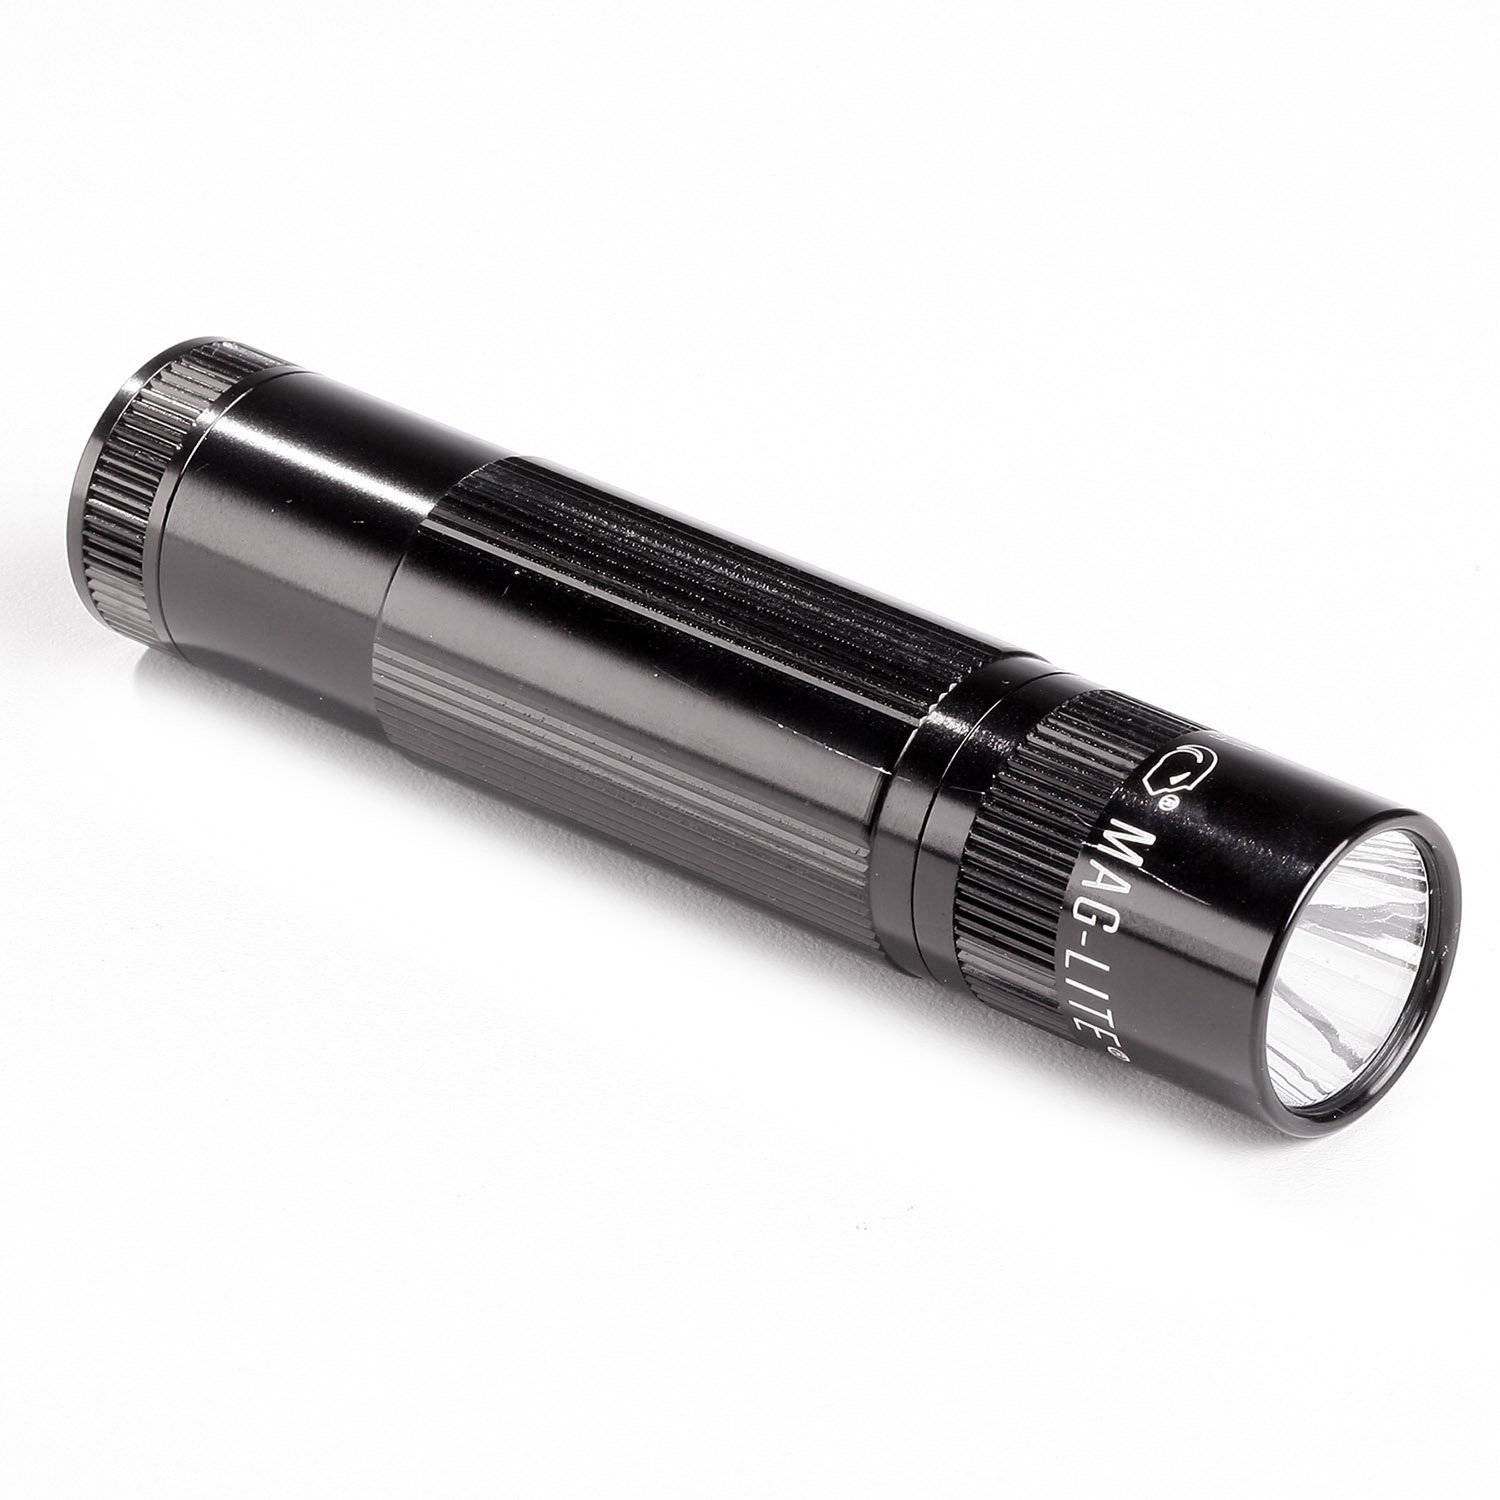 Maglite XL50 LED Tactical Flashlight